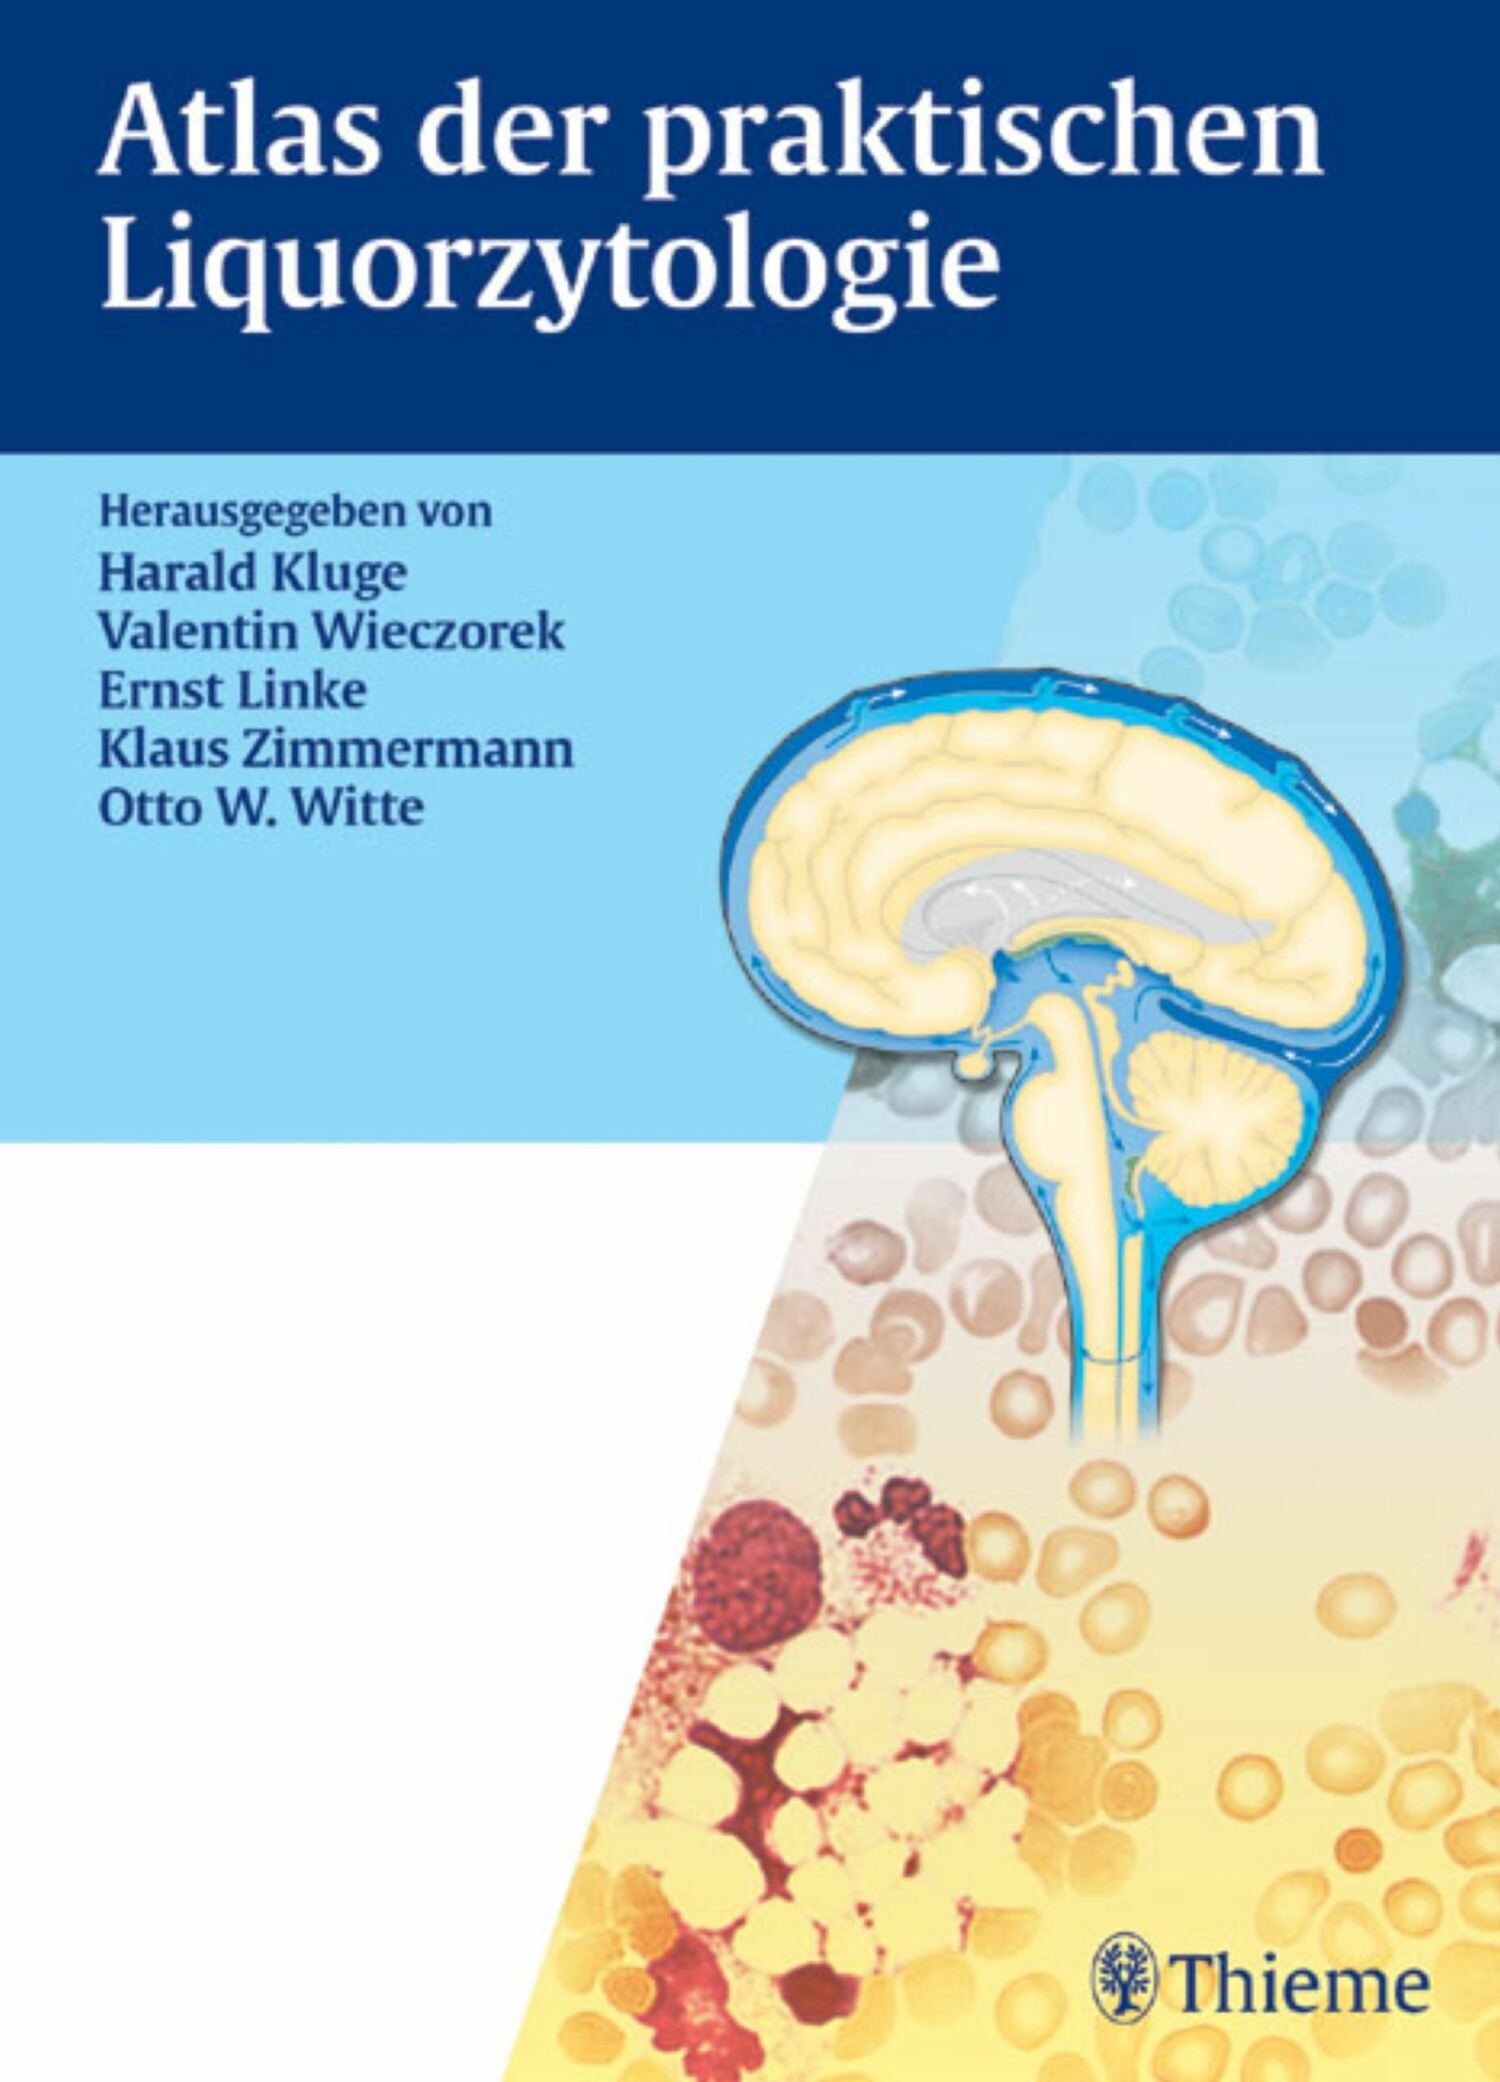 Atlas der praktischen Liquorzytologie